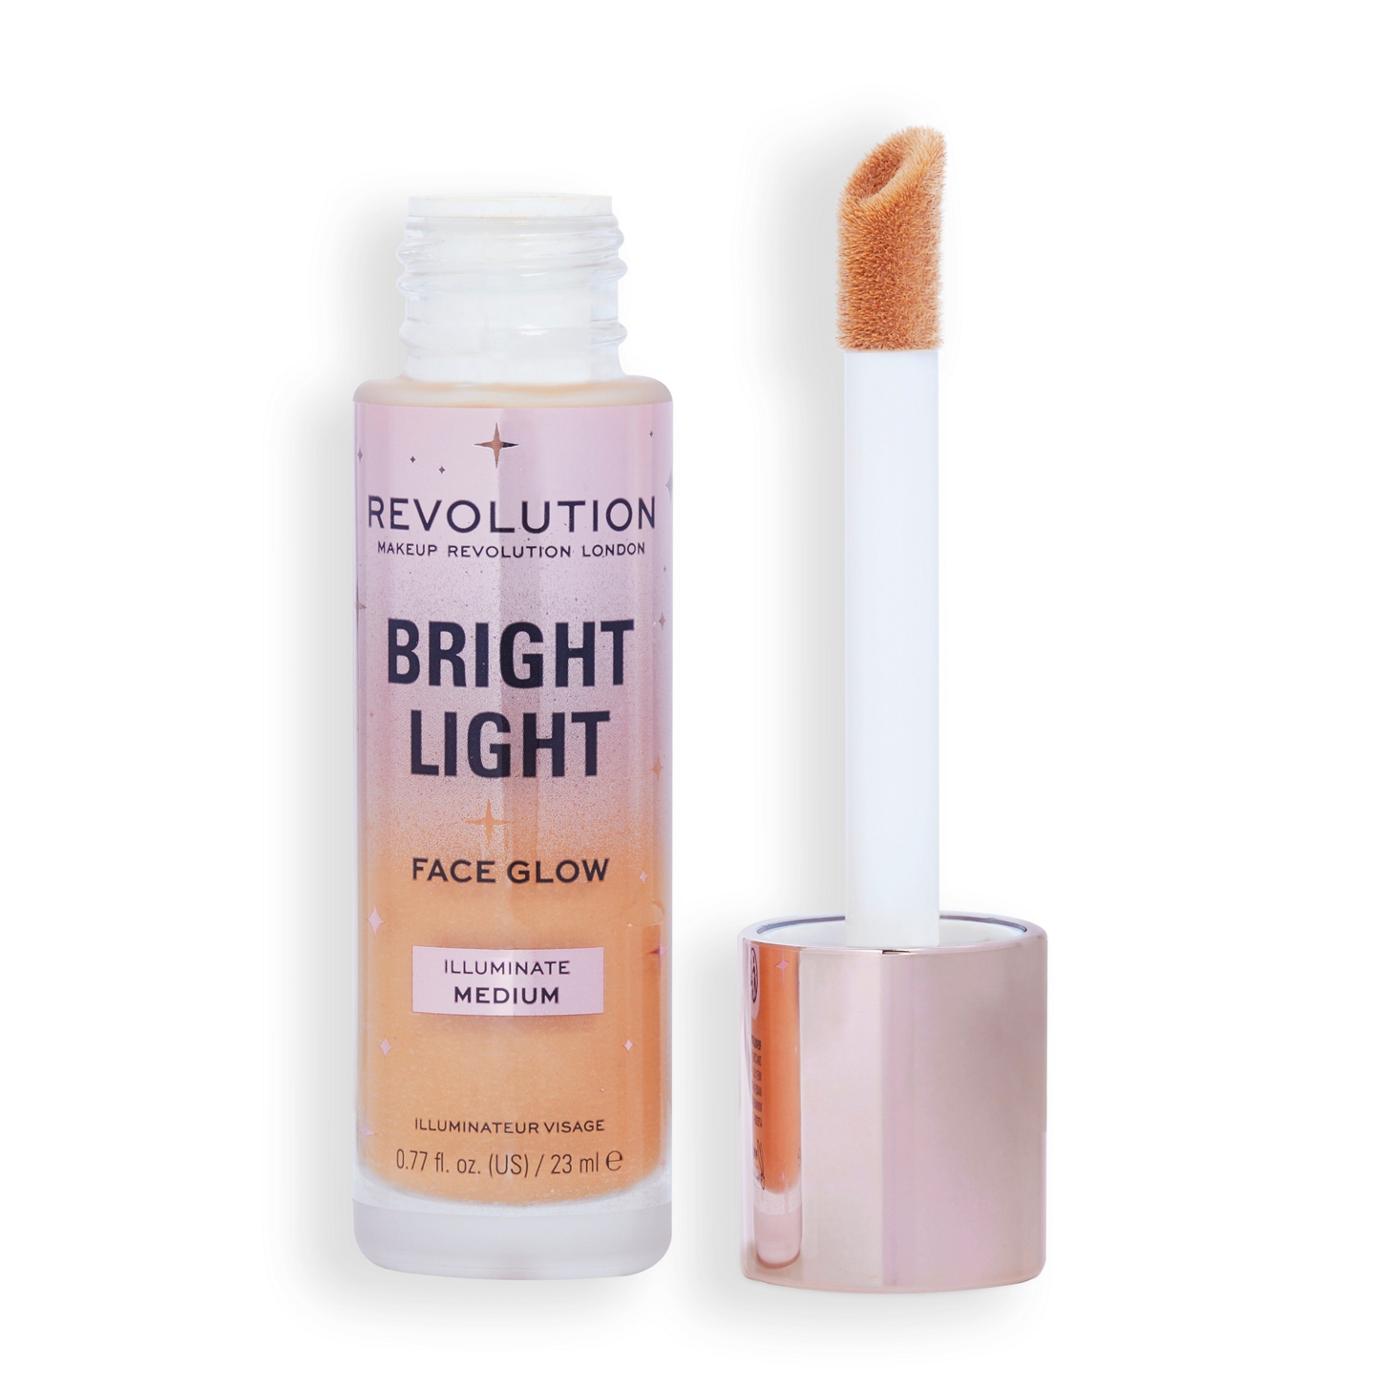 Makeup Revolution Bright Light Face Glow - Illuminate Medium; image 2 of 3